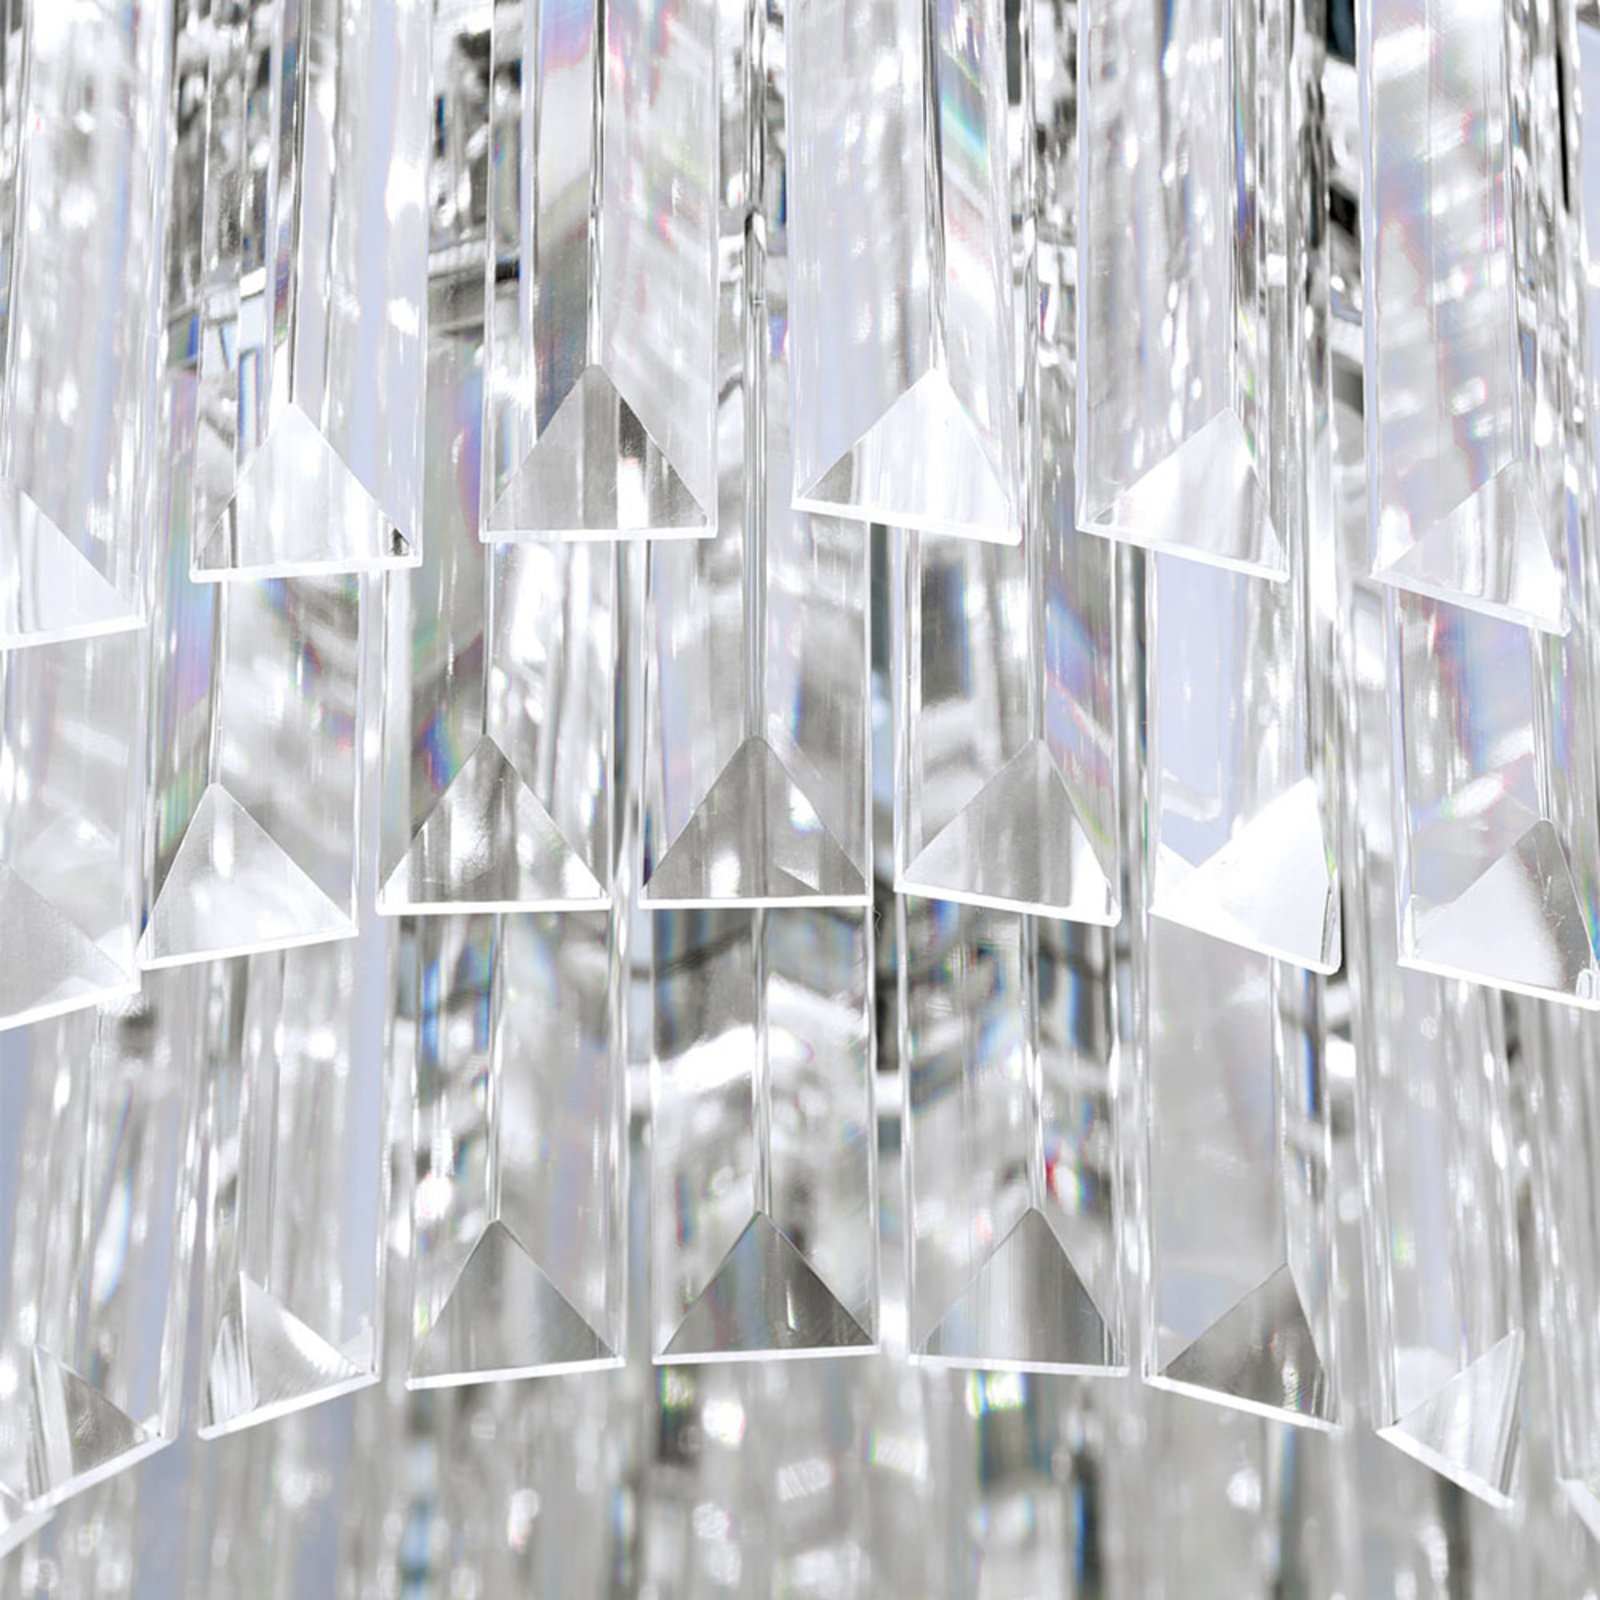 LED plafondlamp Prism, chroom, Ø 35 cm